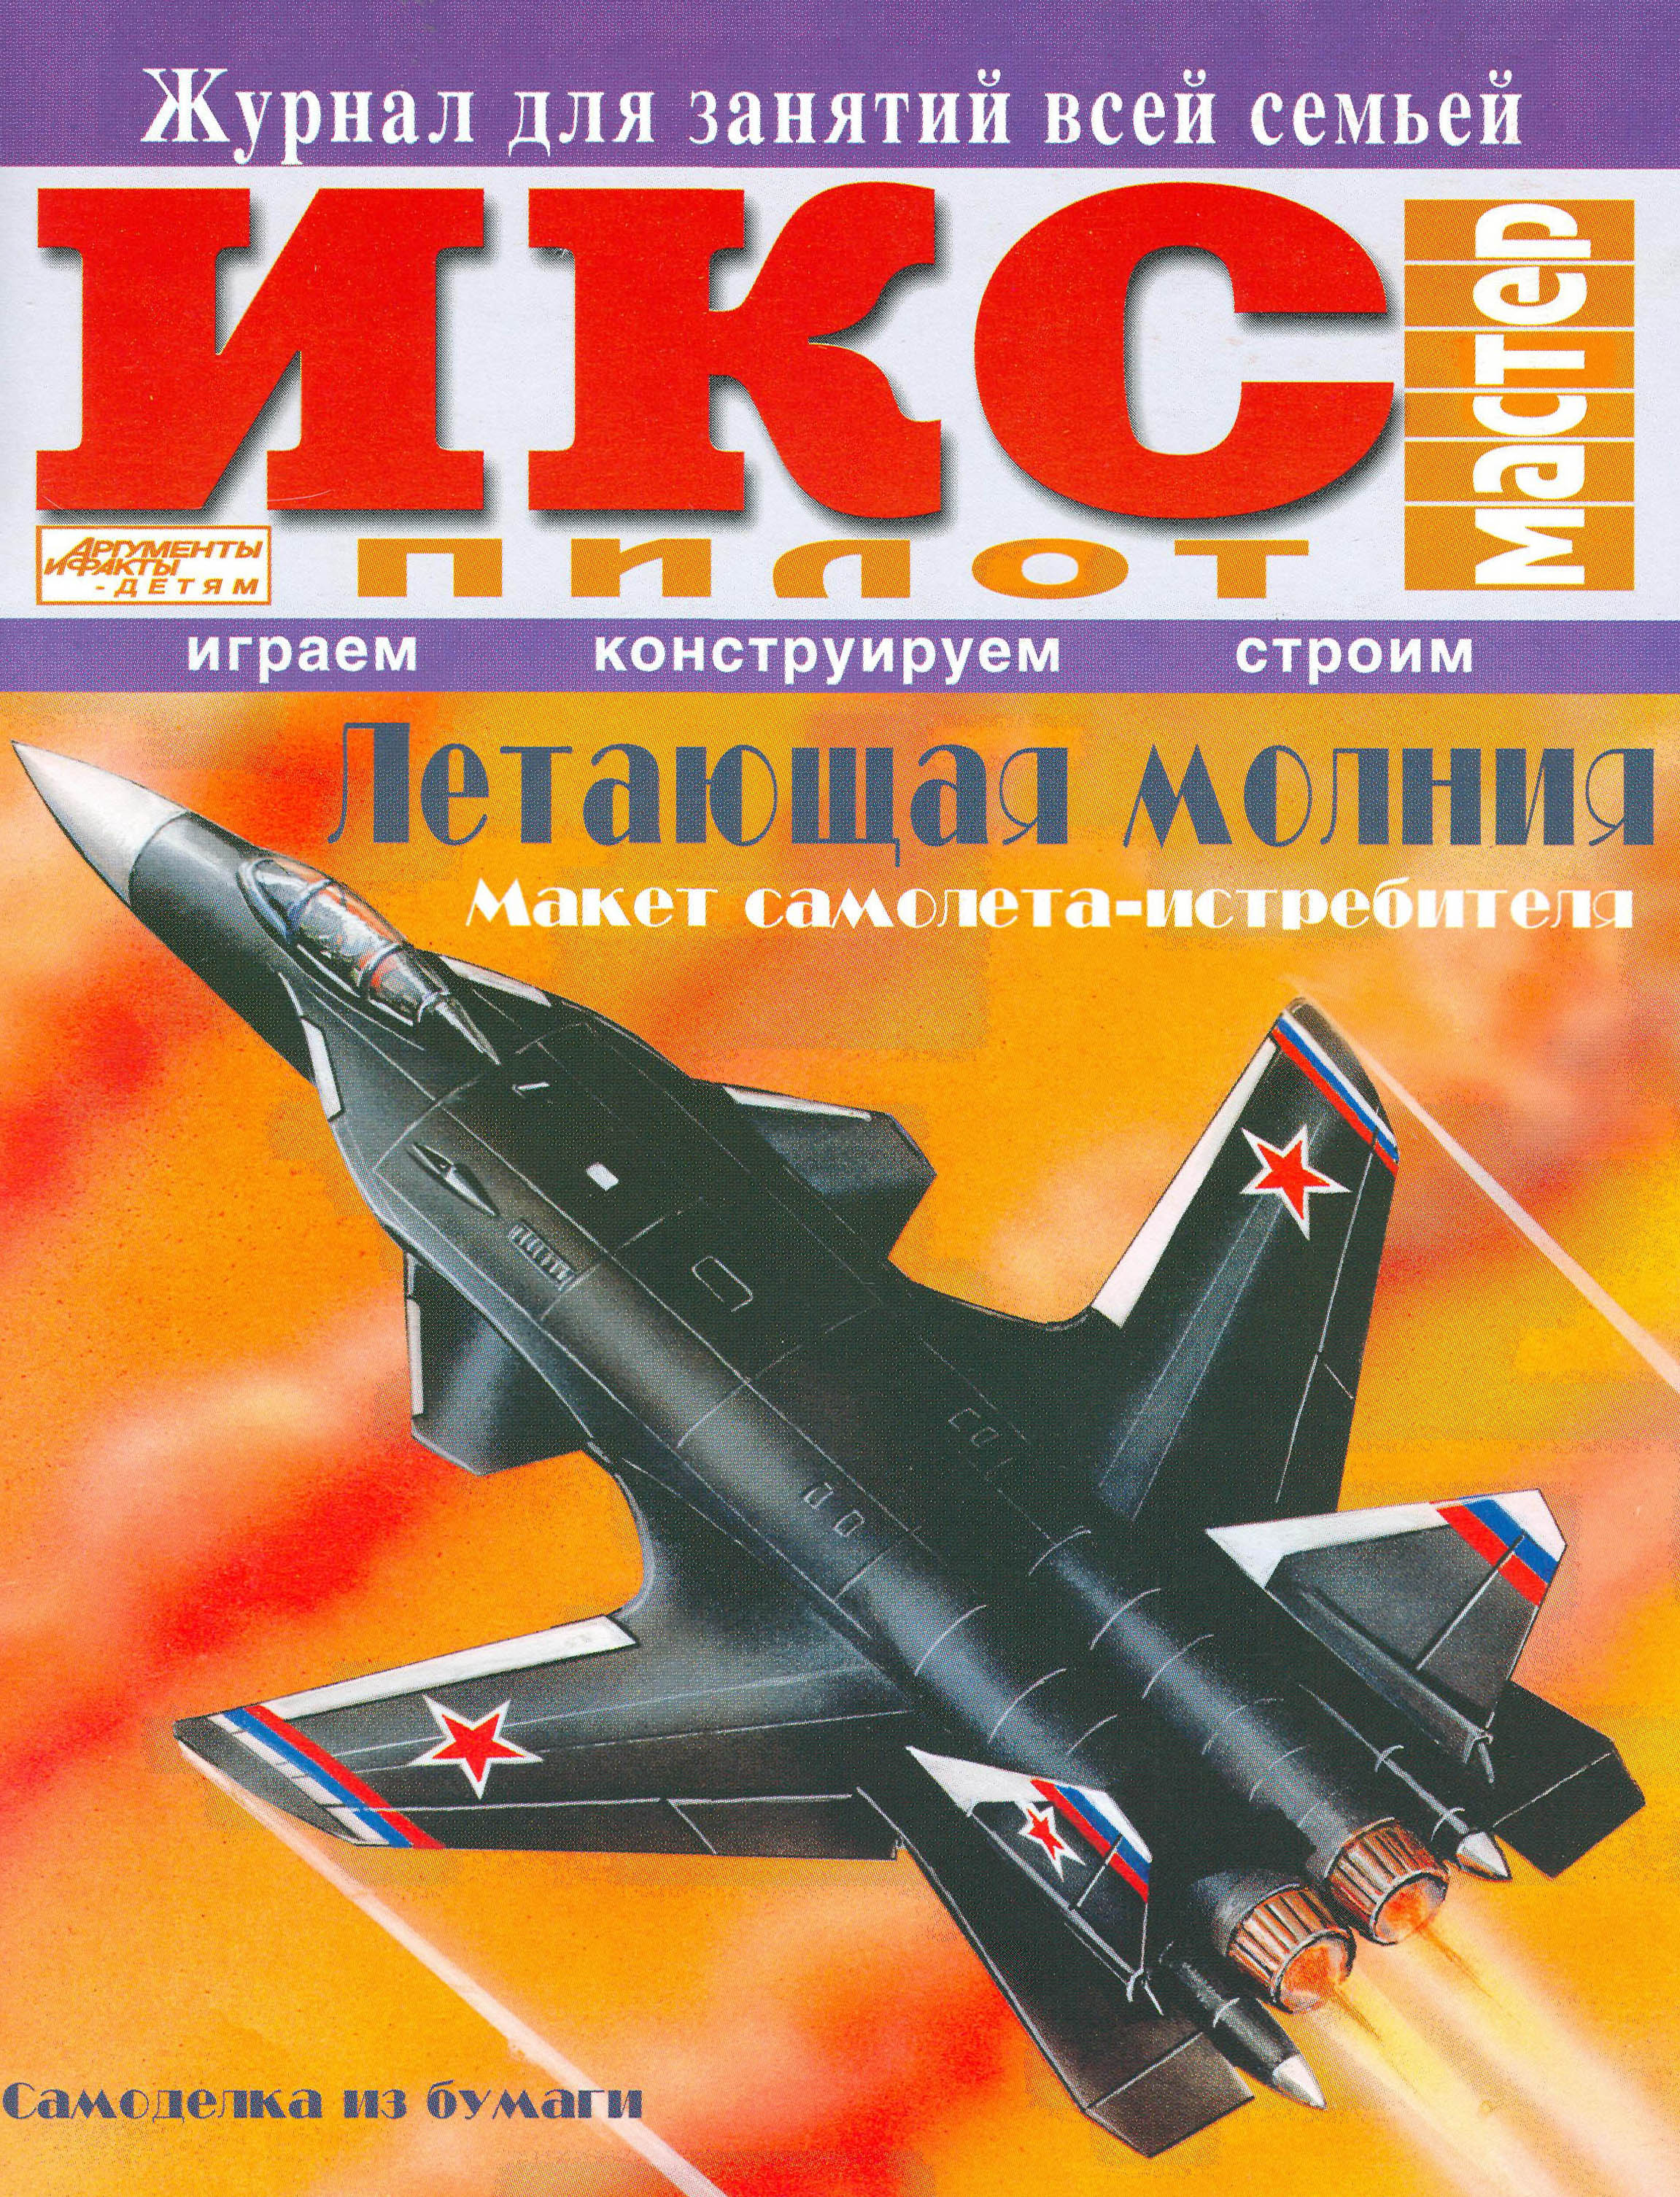 IKS Pilot Master - Samolot Su-47.jpg